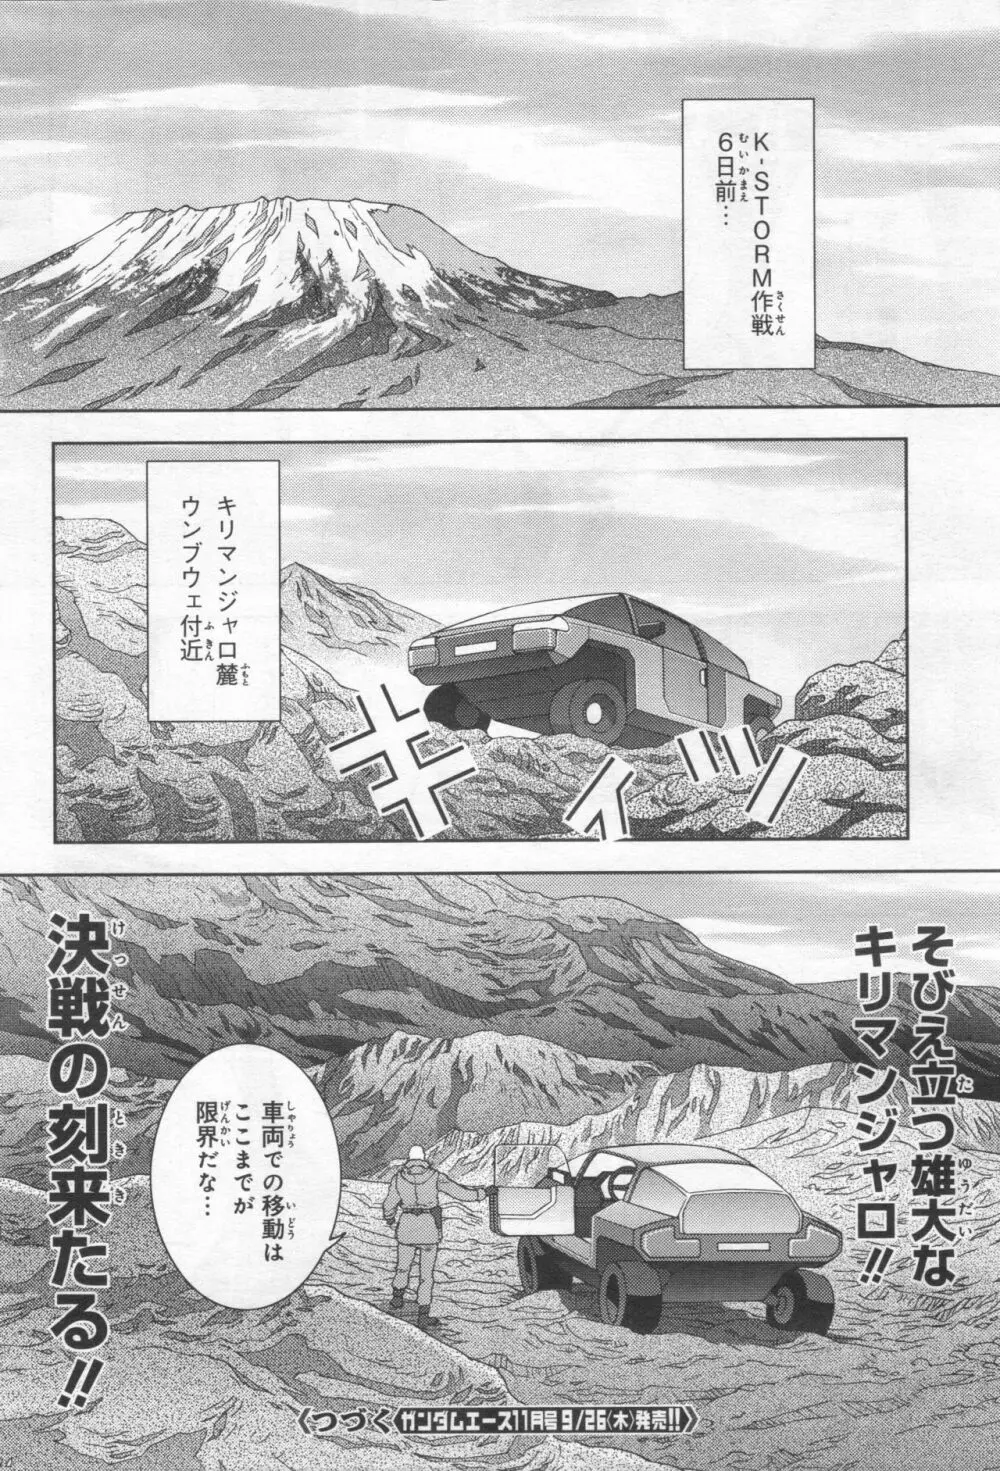 Gundam Ace – October 2019 309ページ